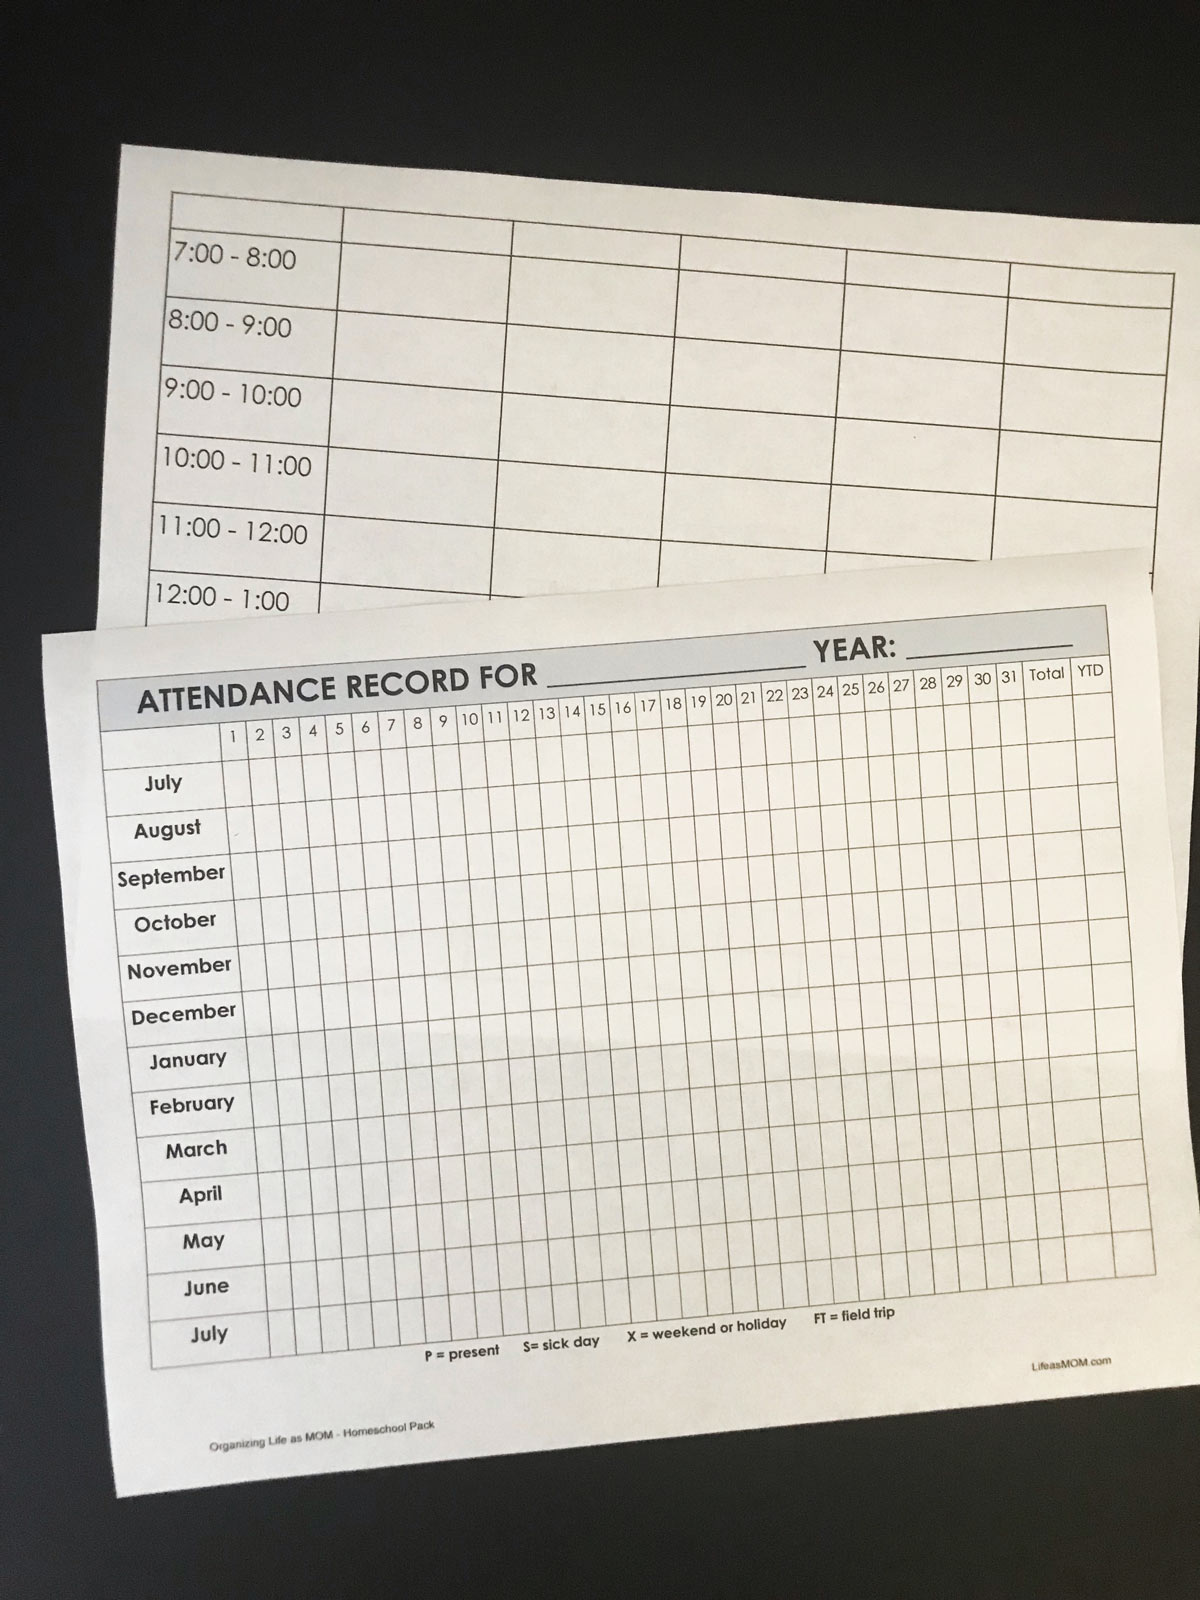 printed attendance calendar and schedule worksheet.